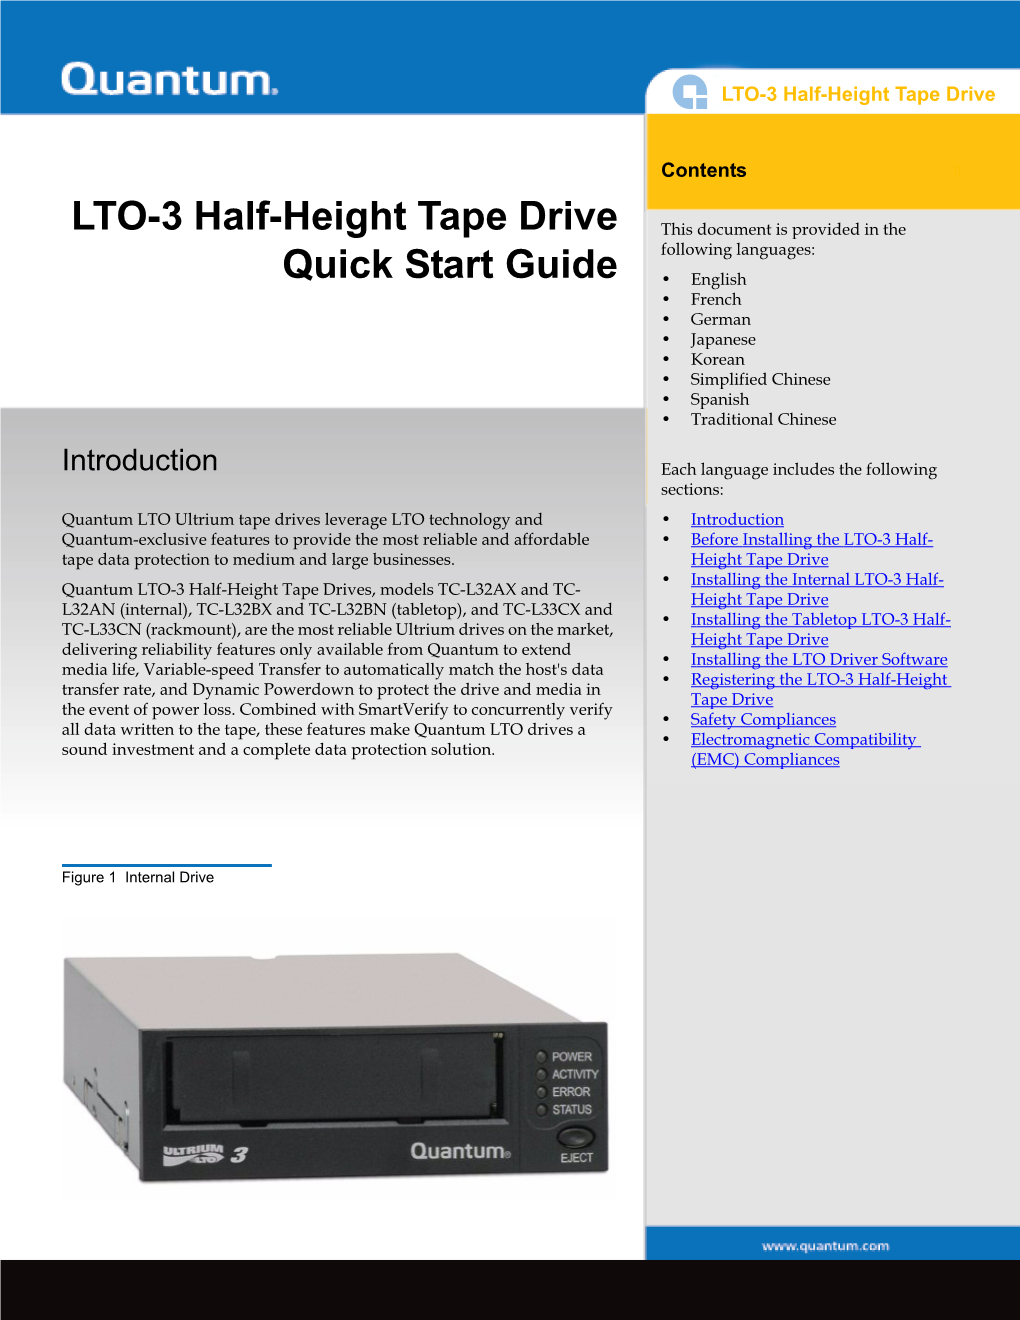 Quantum LTO-3 Half-Height Tape Drive Quick Start Guide